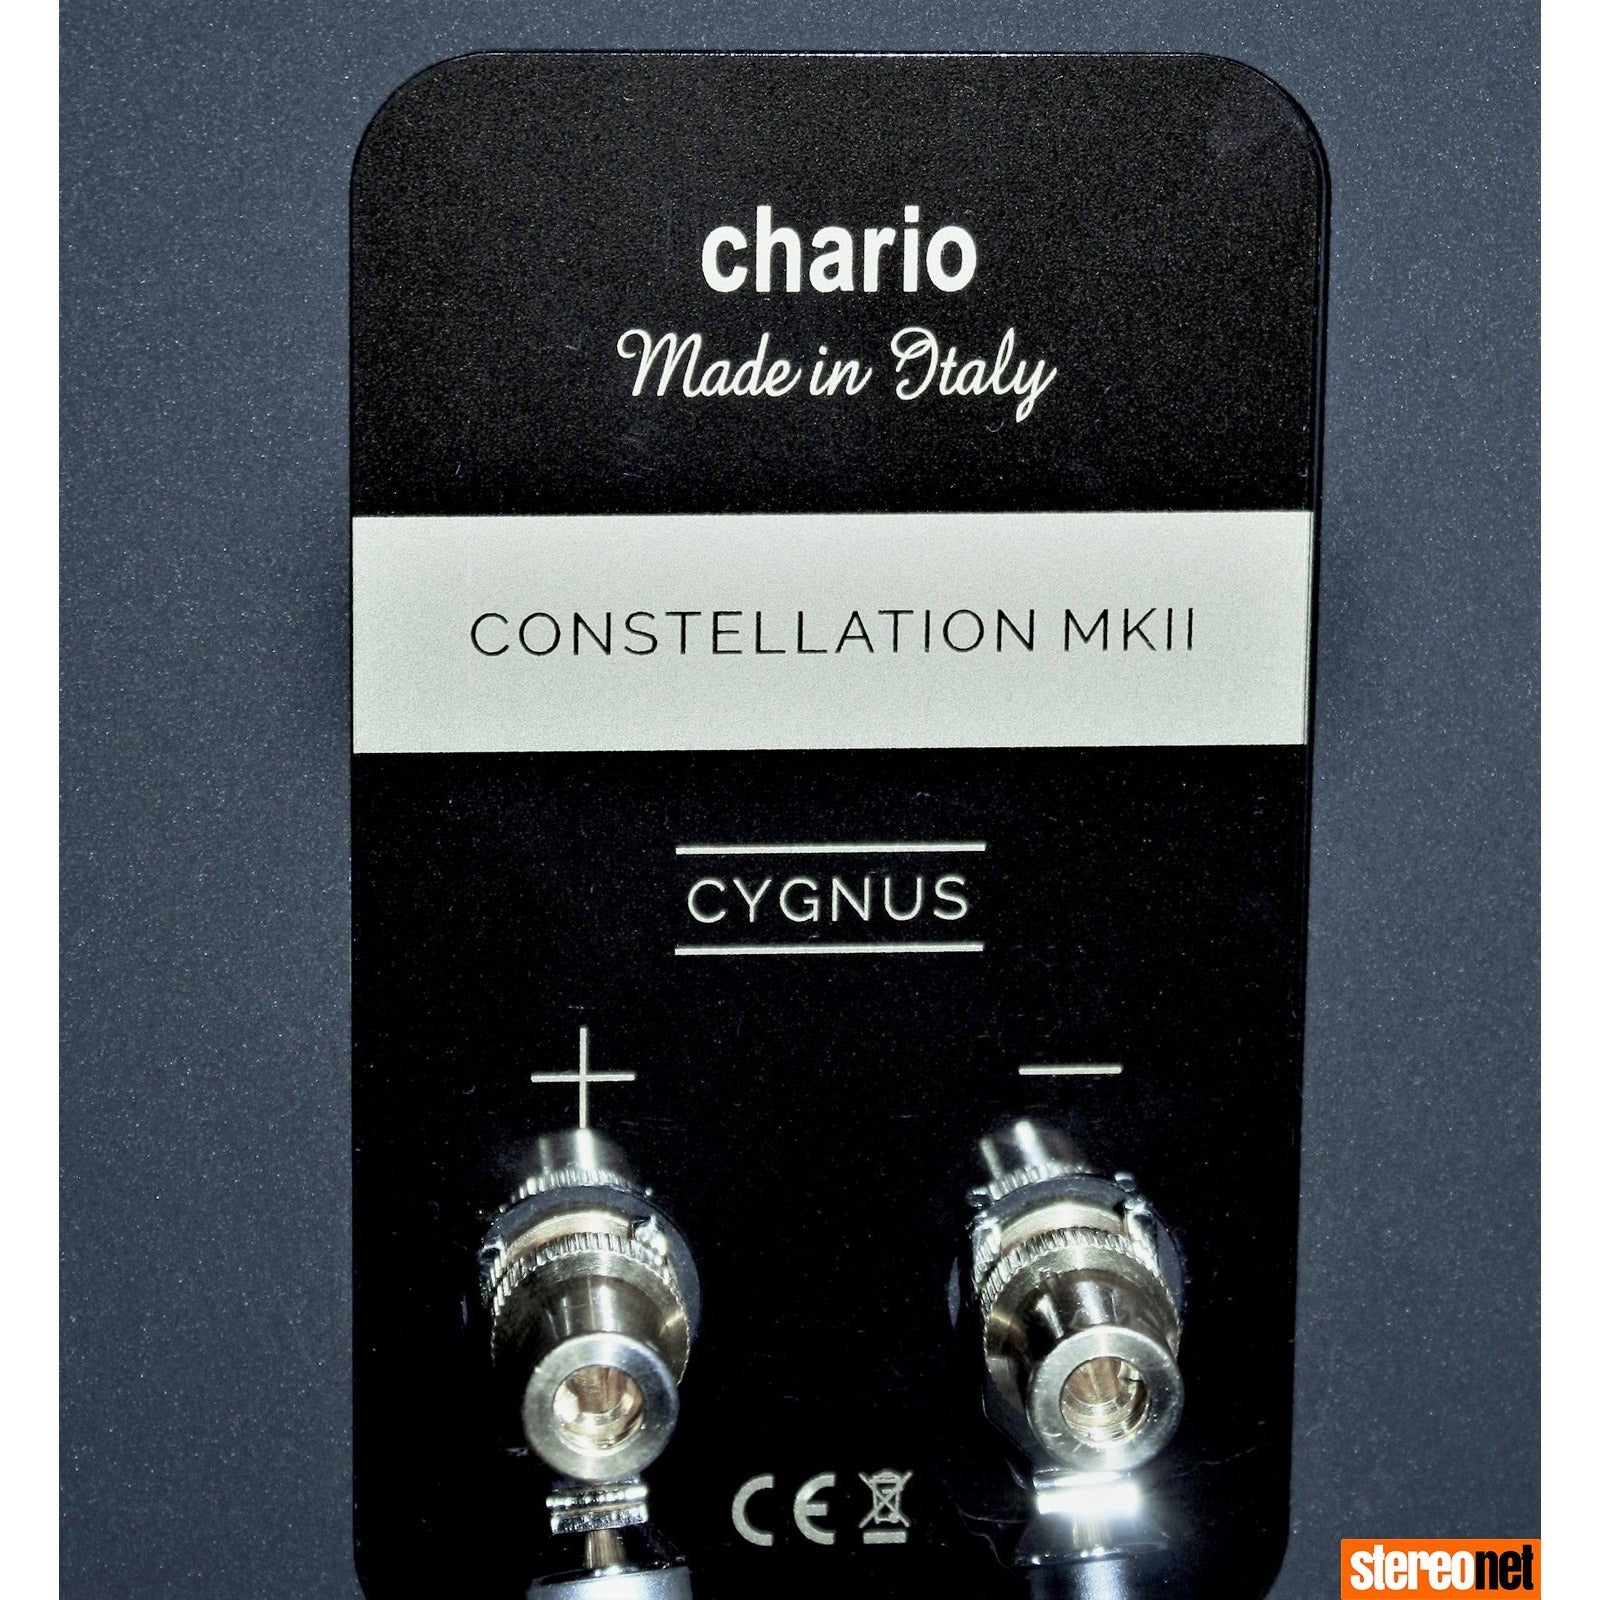 Chario Constellation MKII Cygnus Floorstanding Speakers